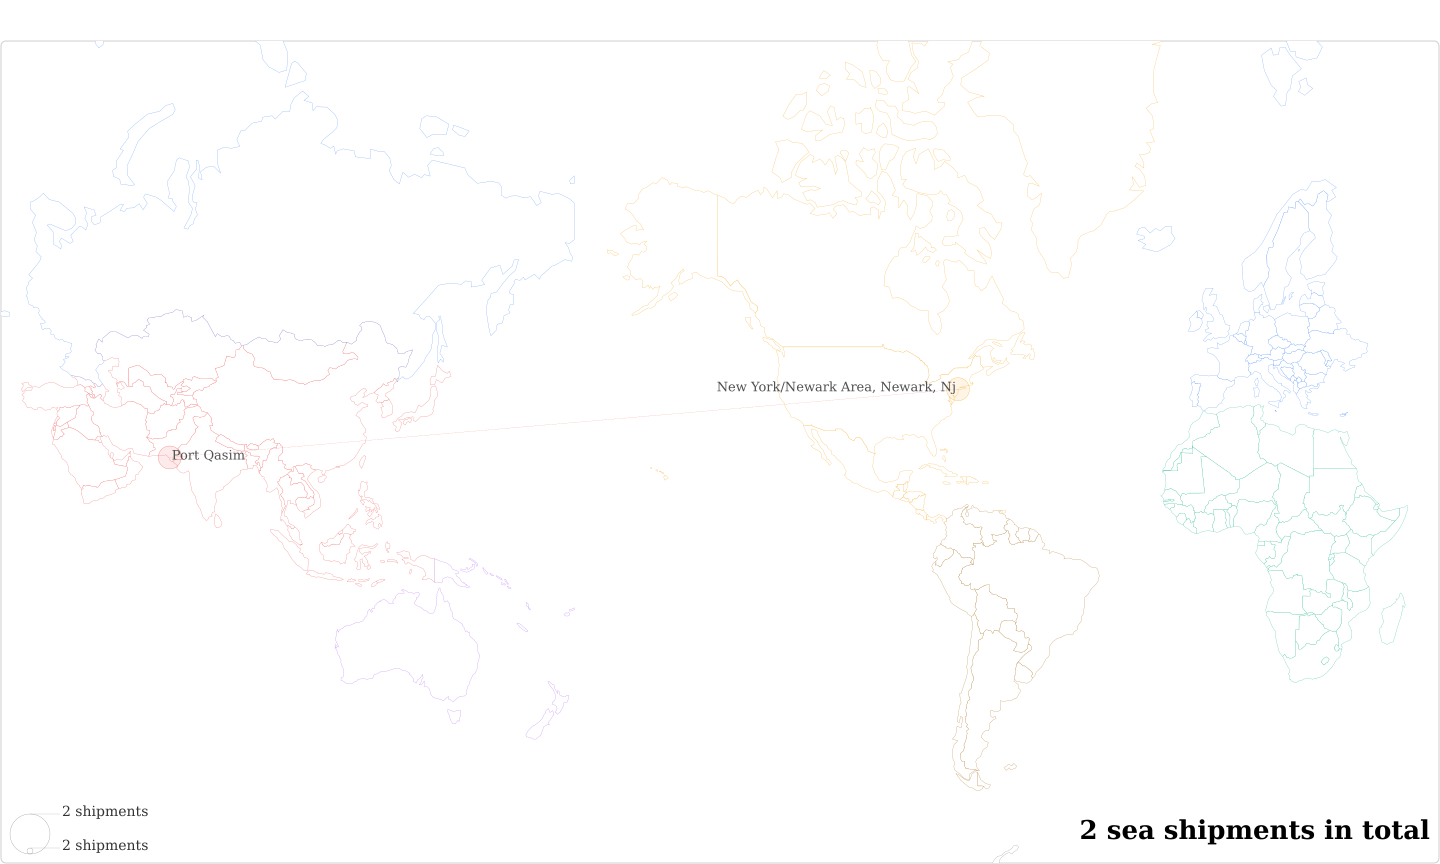 Nizar Nooruddin Sivji's Imports Per Country Map